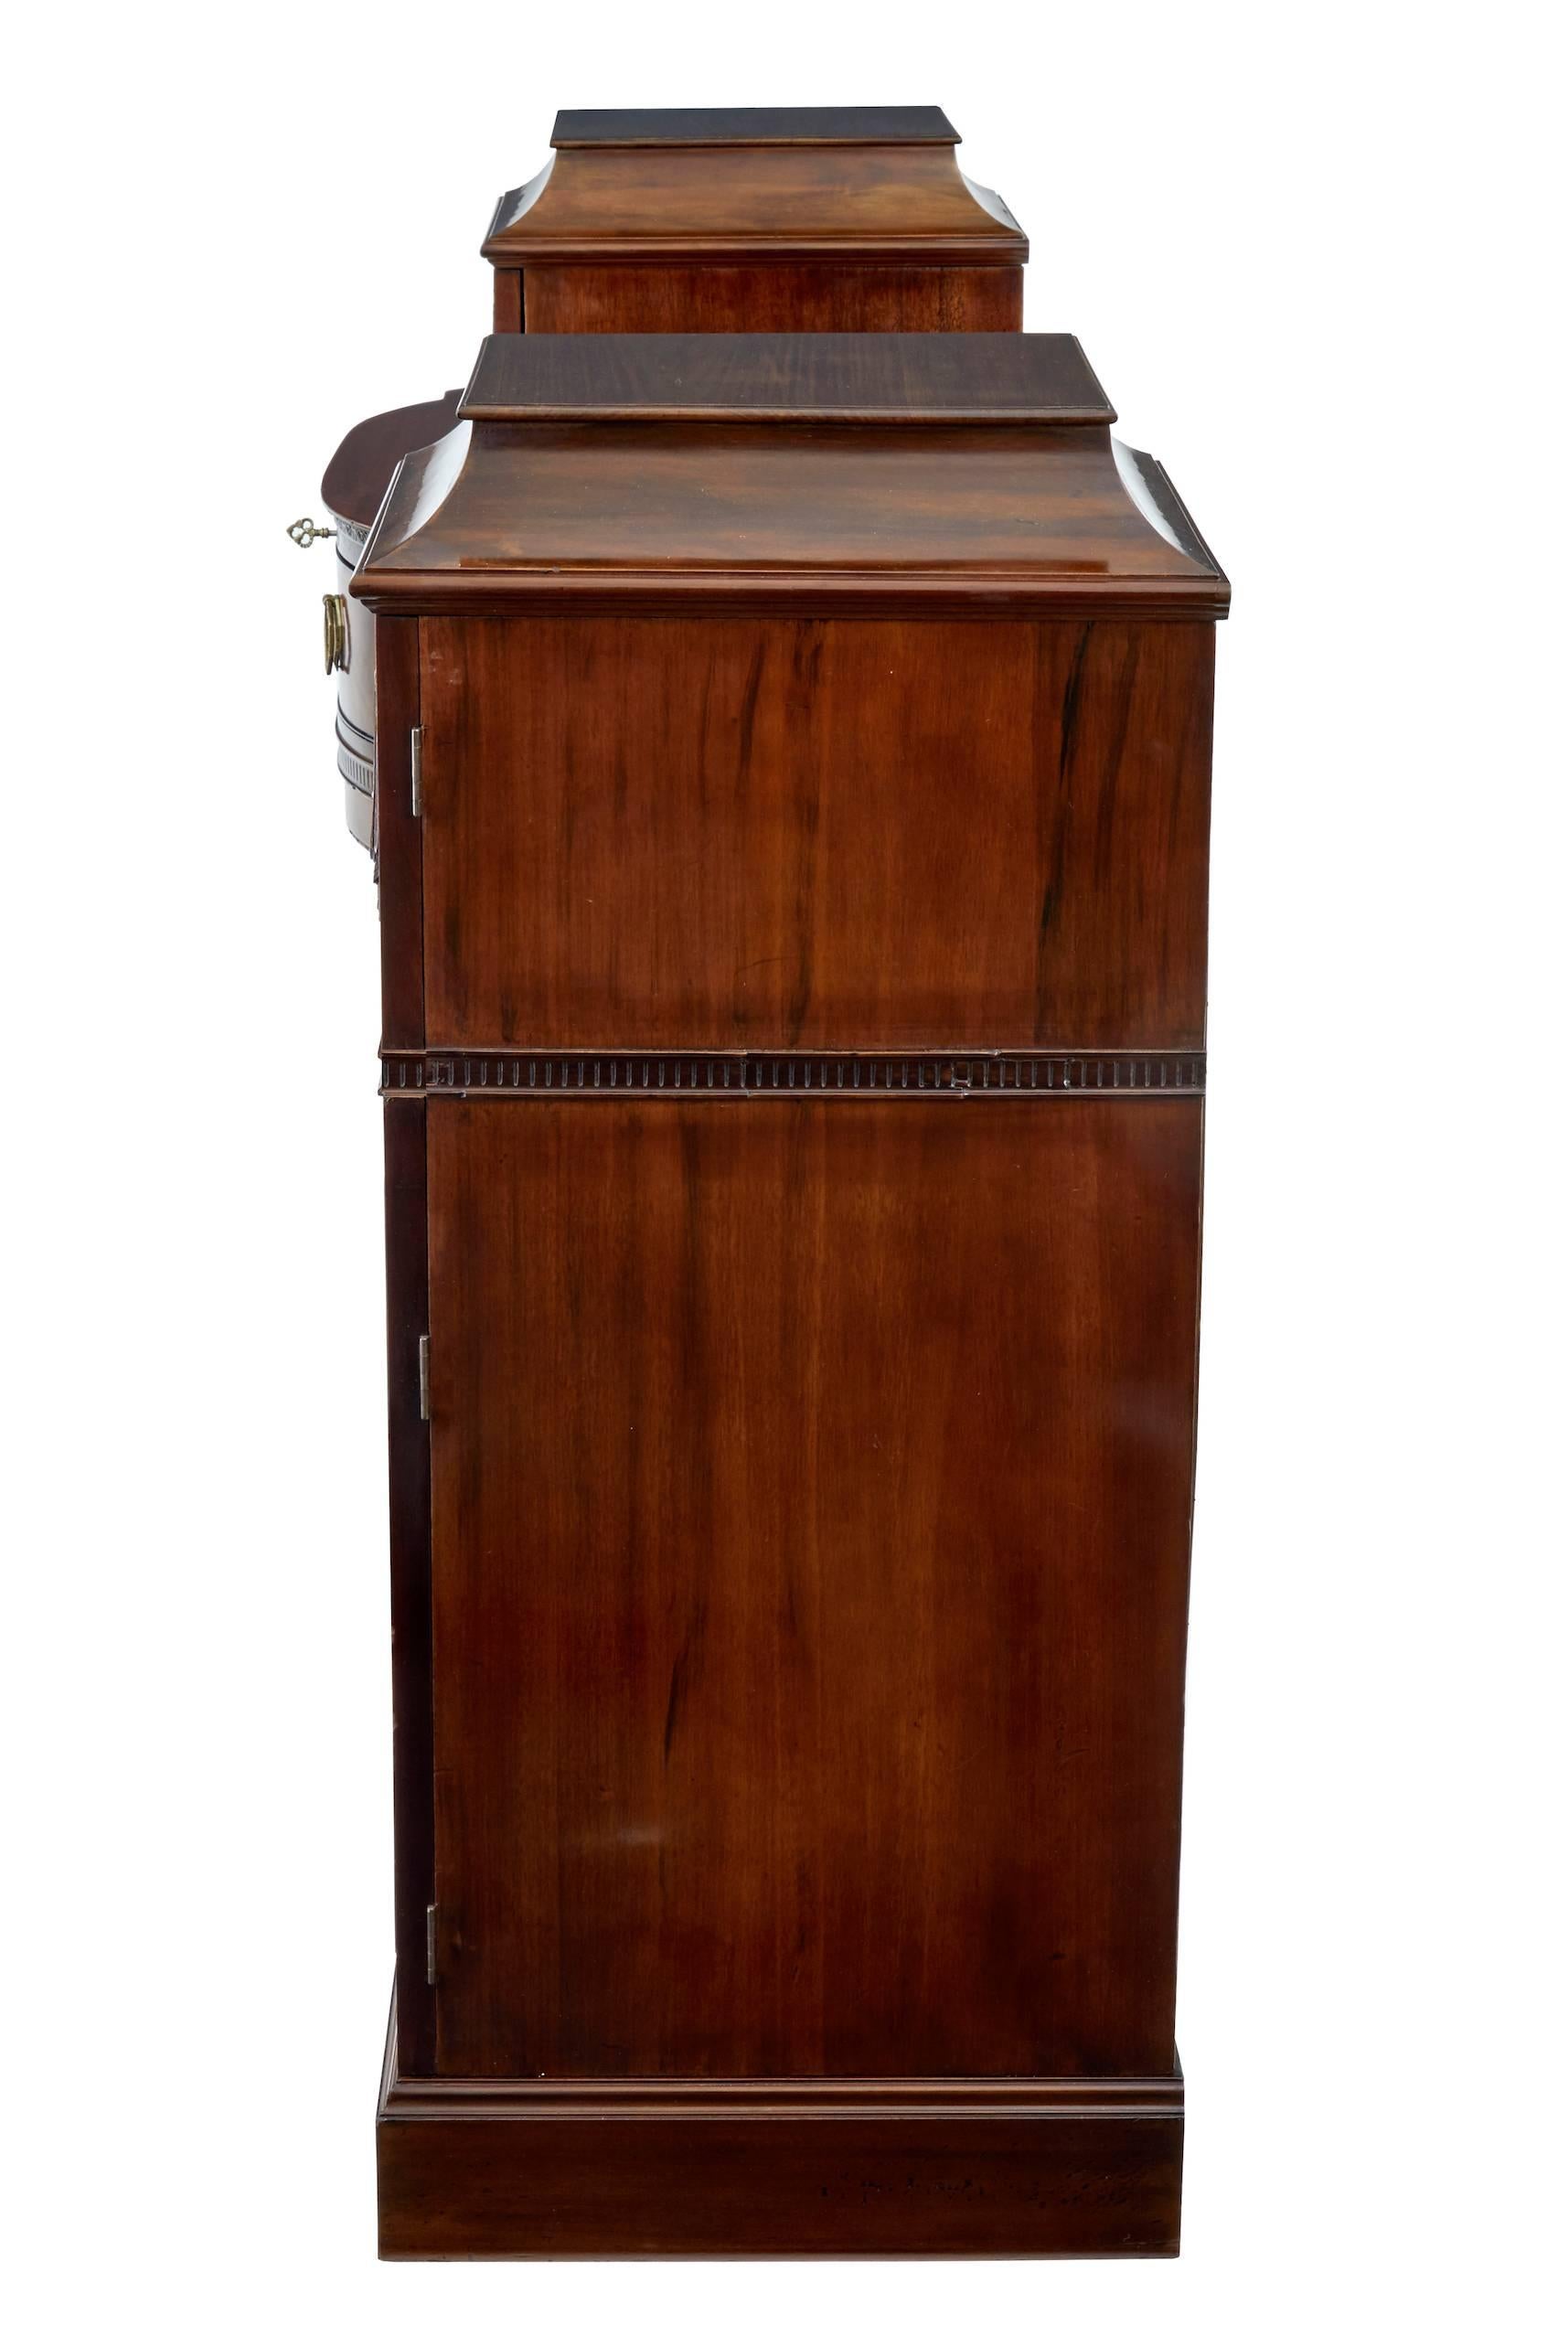 19th Century Carved Mahogany Pedestal Sideboard in the Adams Taste 2